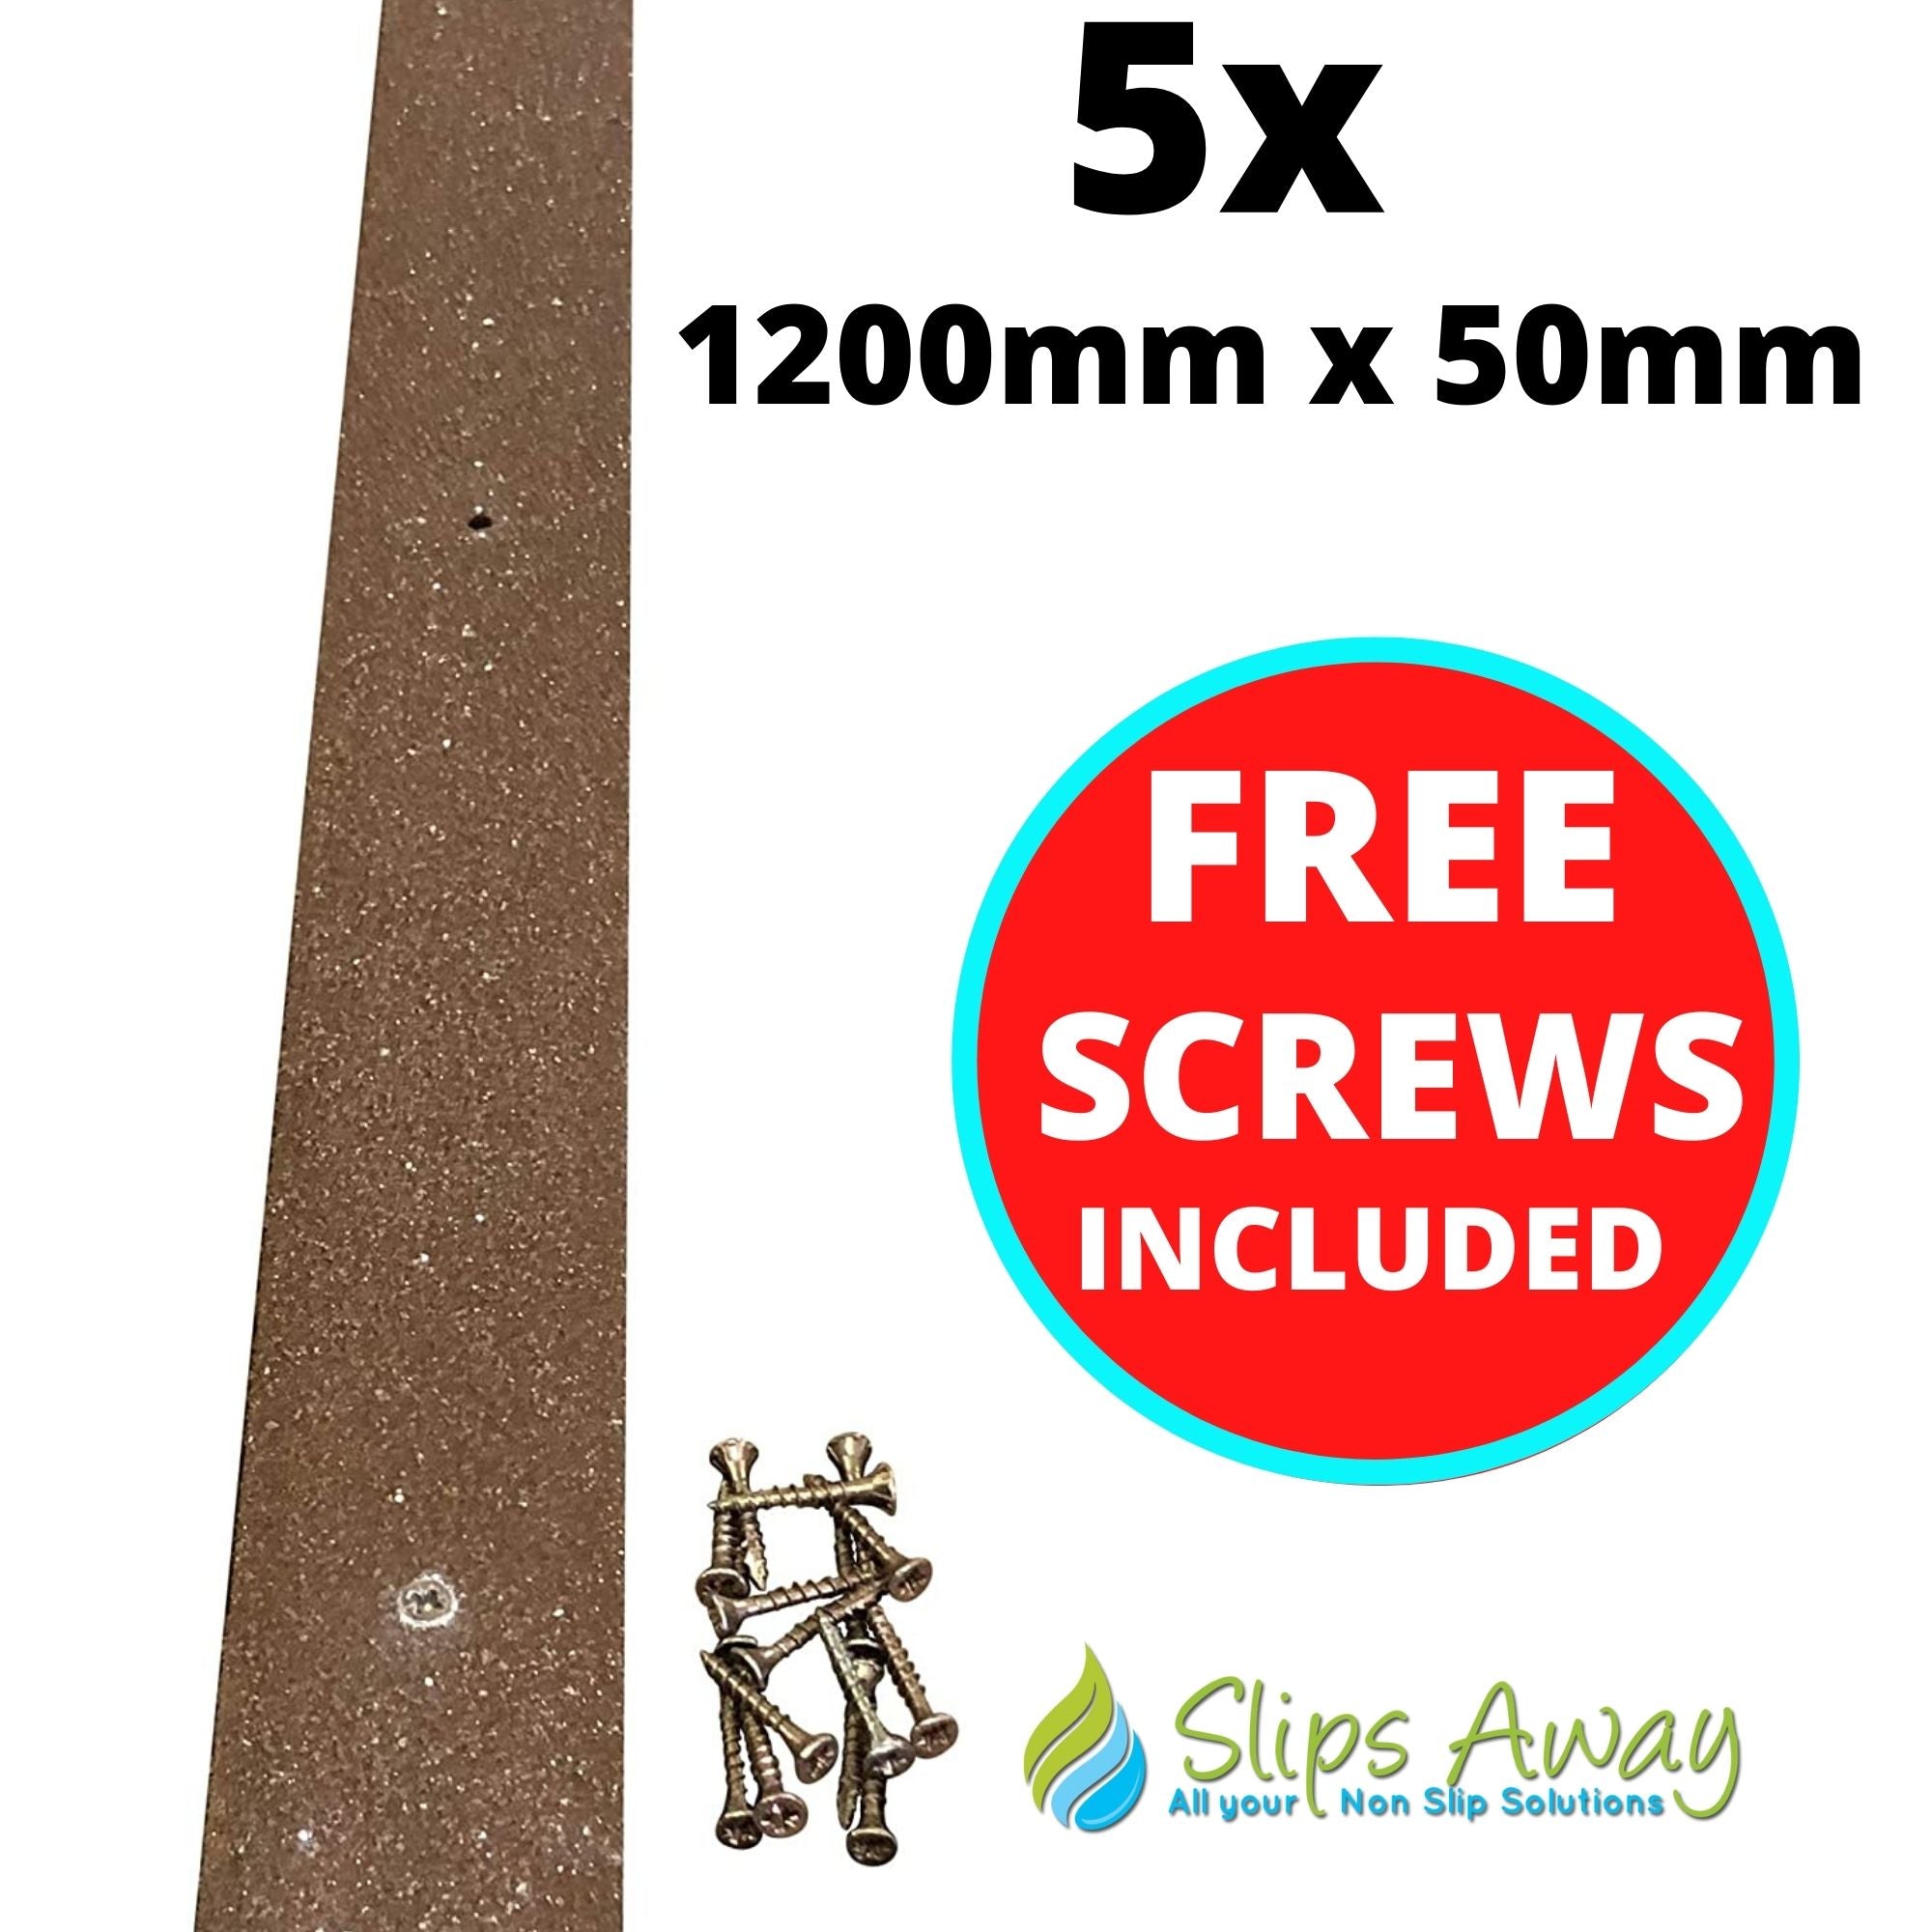 Brown Non Slip Decking Strips - Slips Away decking strip brown 1200mm x 50mm 5x pack -# - 5061000044284 decking strip brown 1200mm x 50mm 5x pack - 1200mm x 50mm